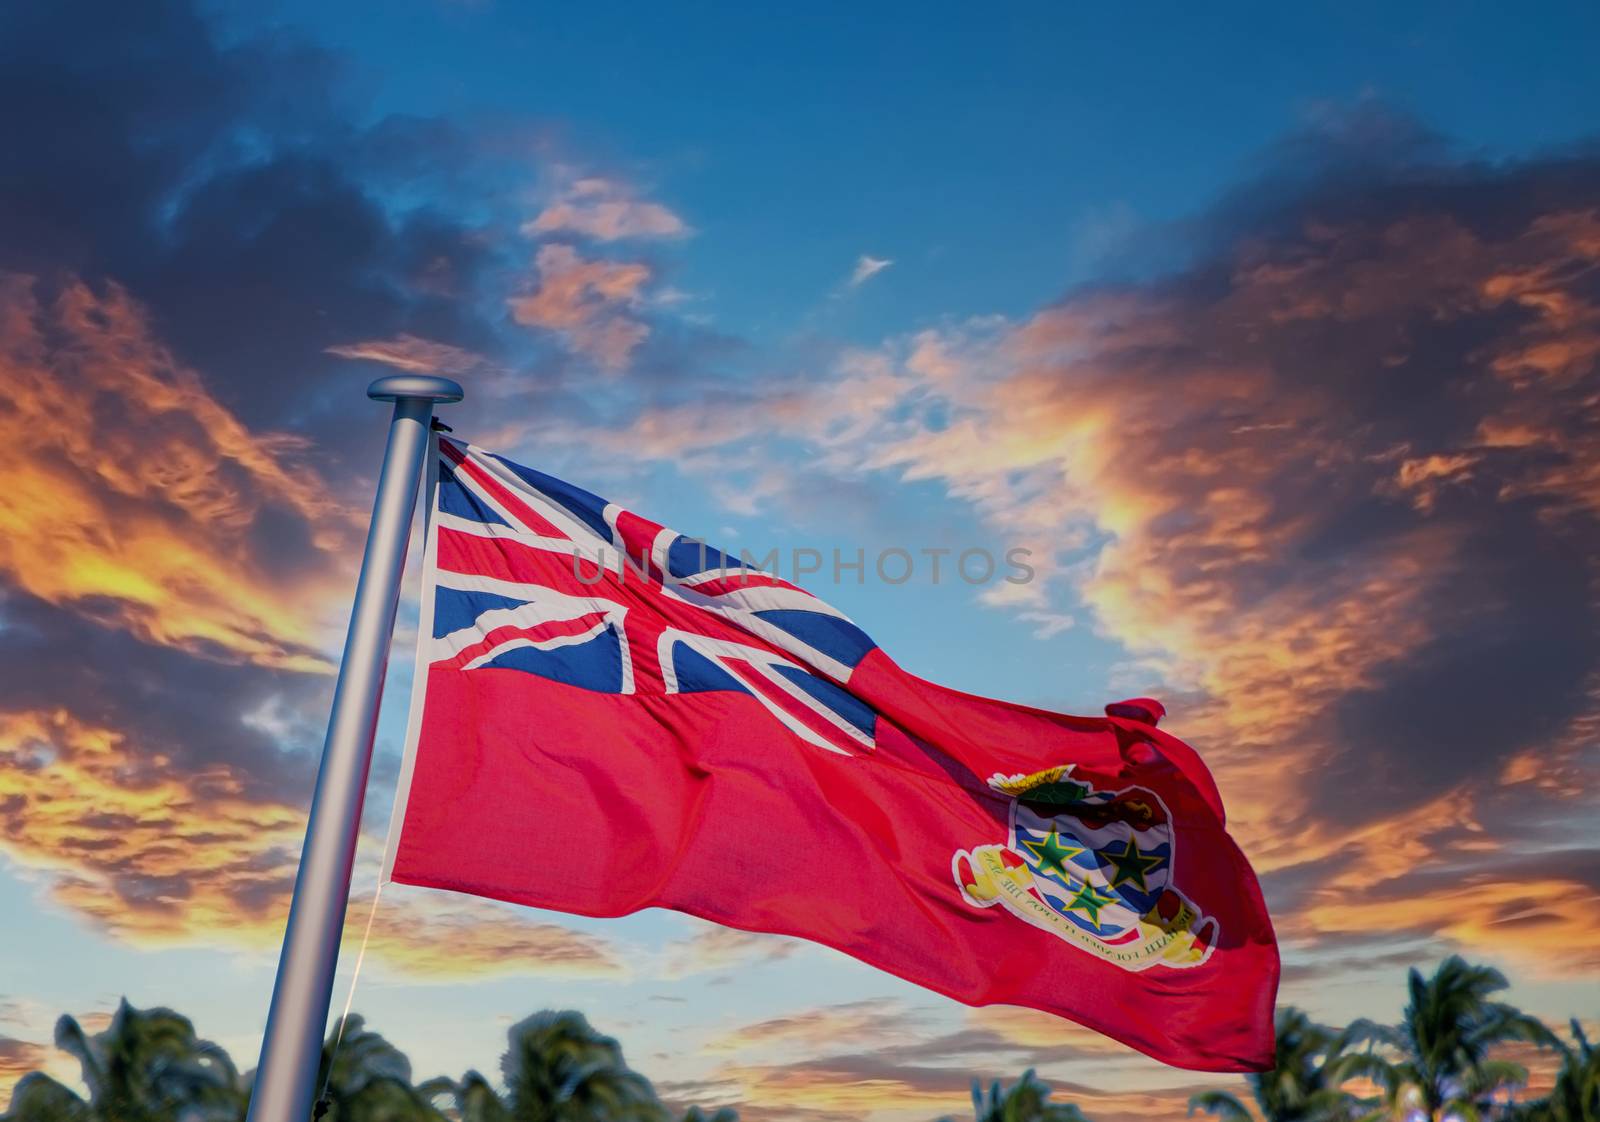 Cayman Islands Flag at Sunset by dbvirago